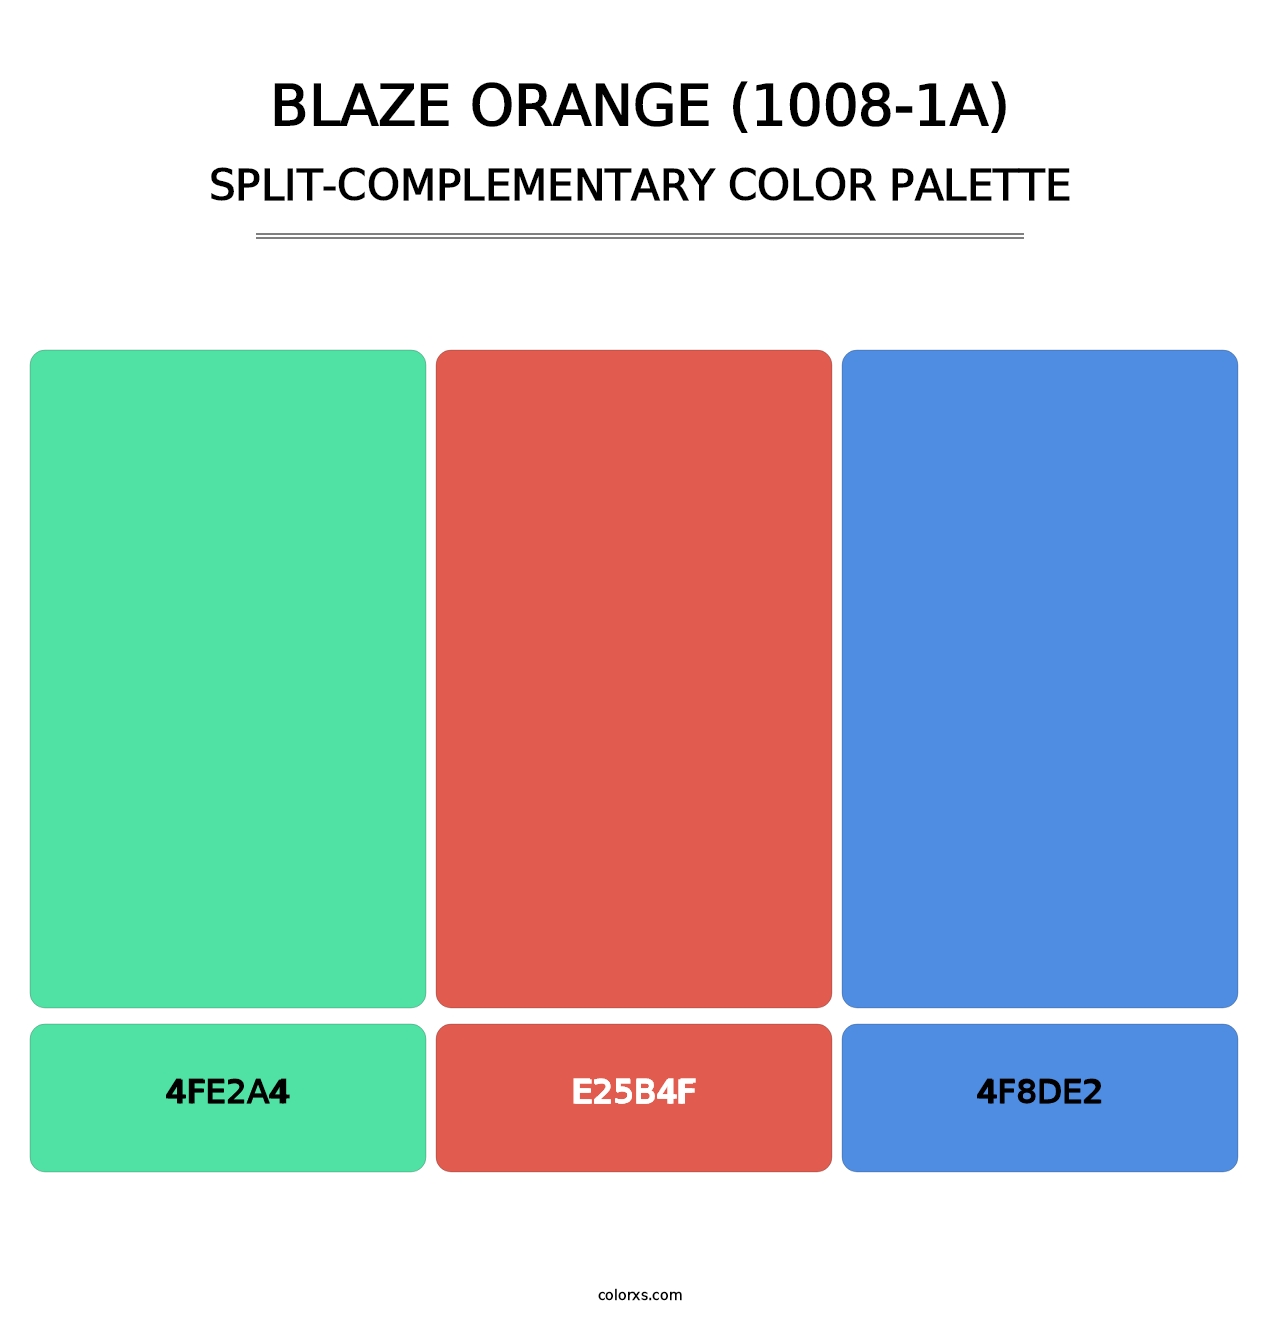 Blaze Orange (1008-1A) - Split-Complementary Color Palette